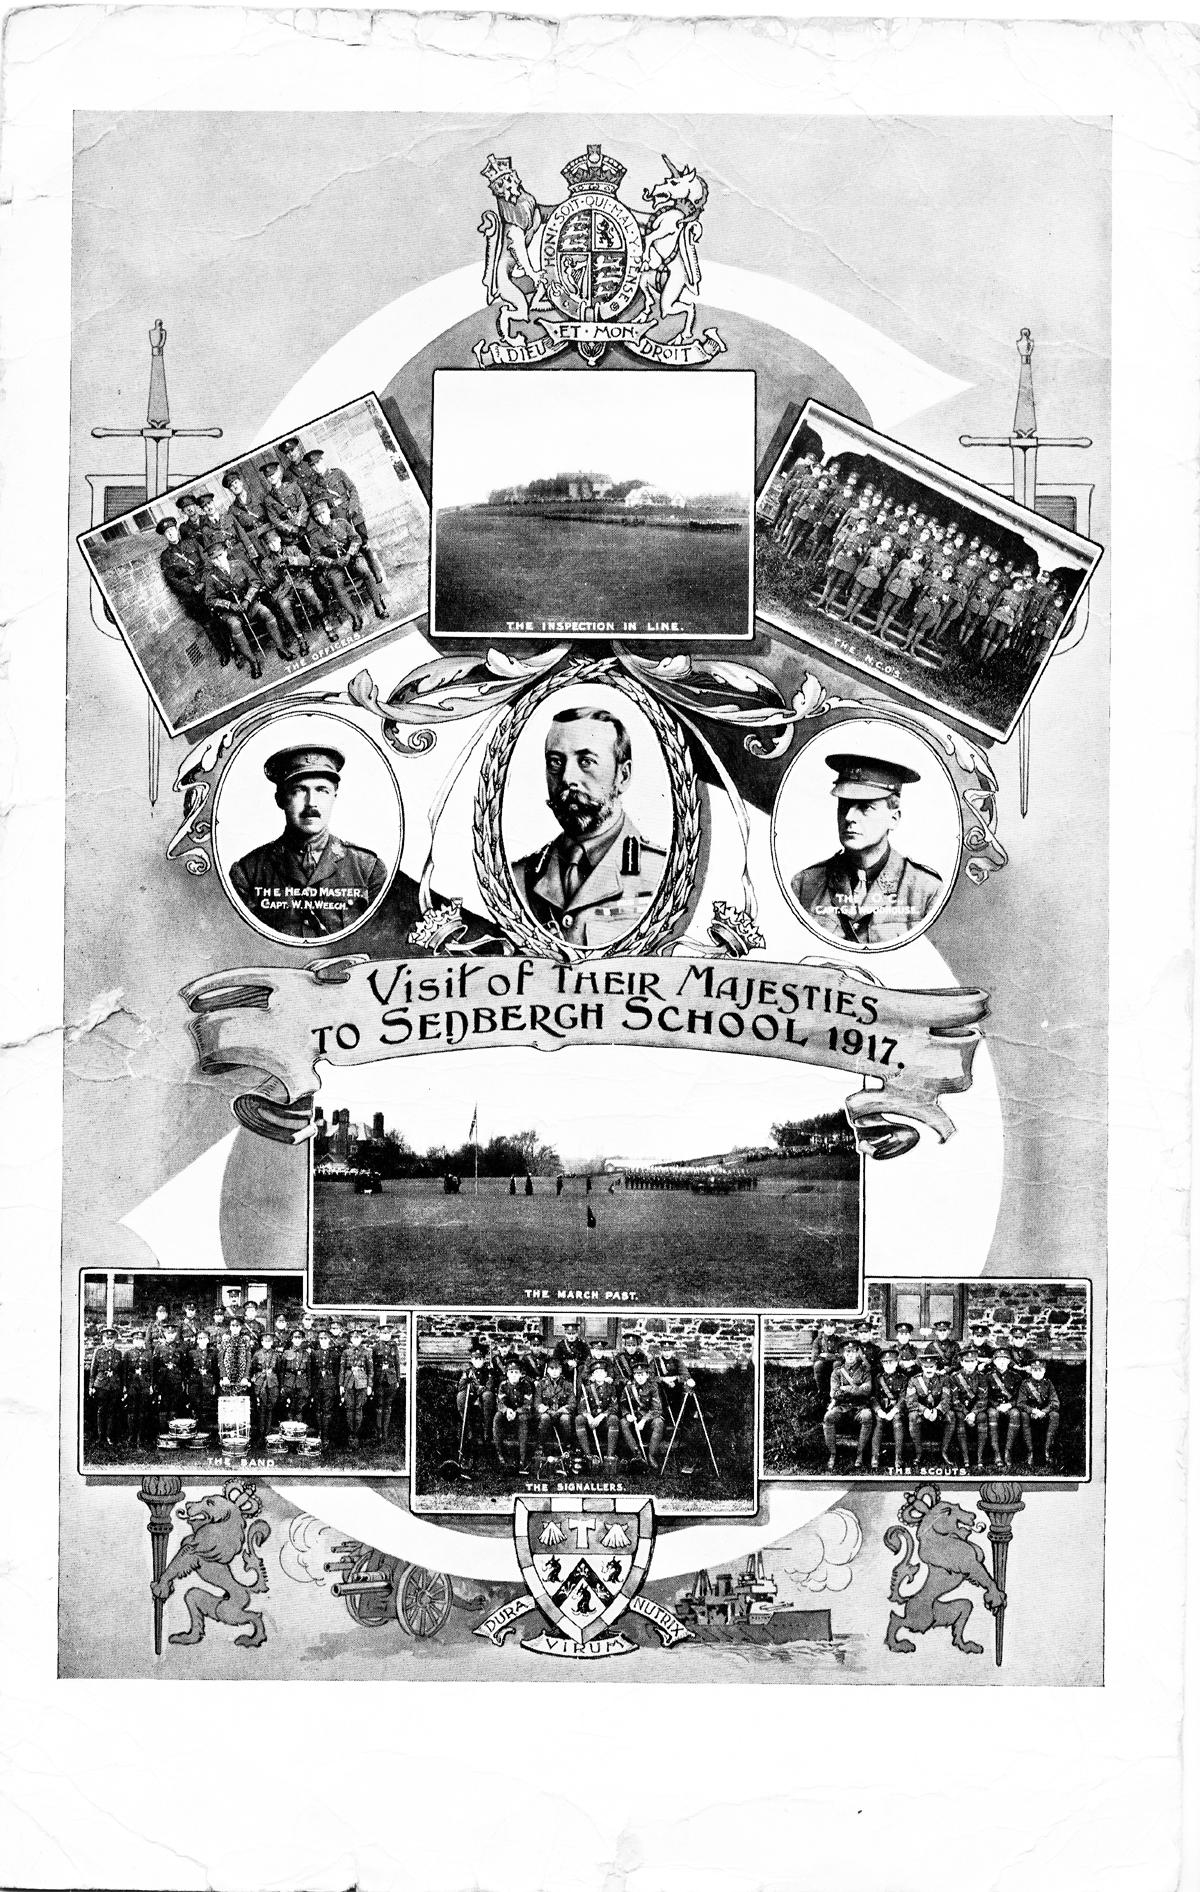 Card commemorating King George V's visit to Sedbergh School in 1917